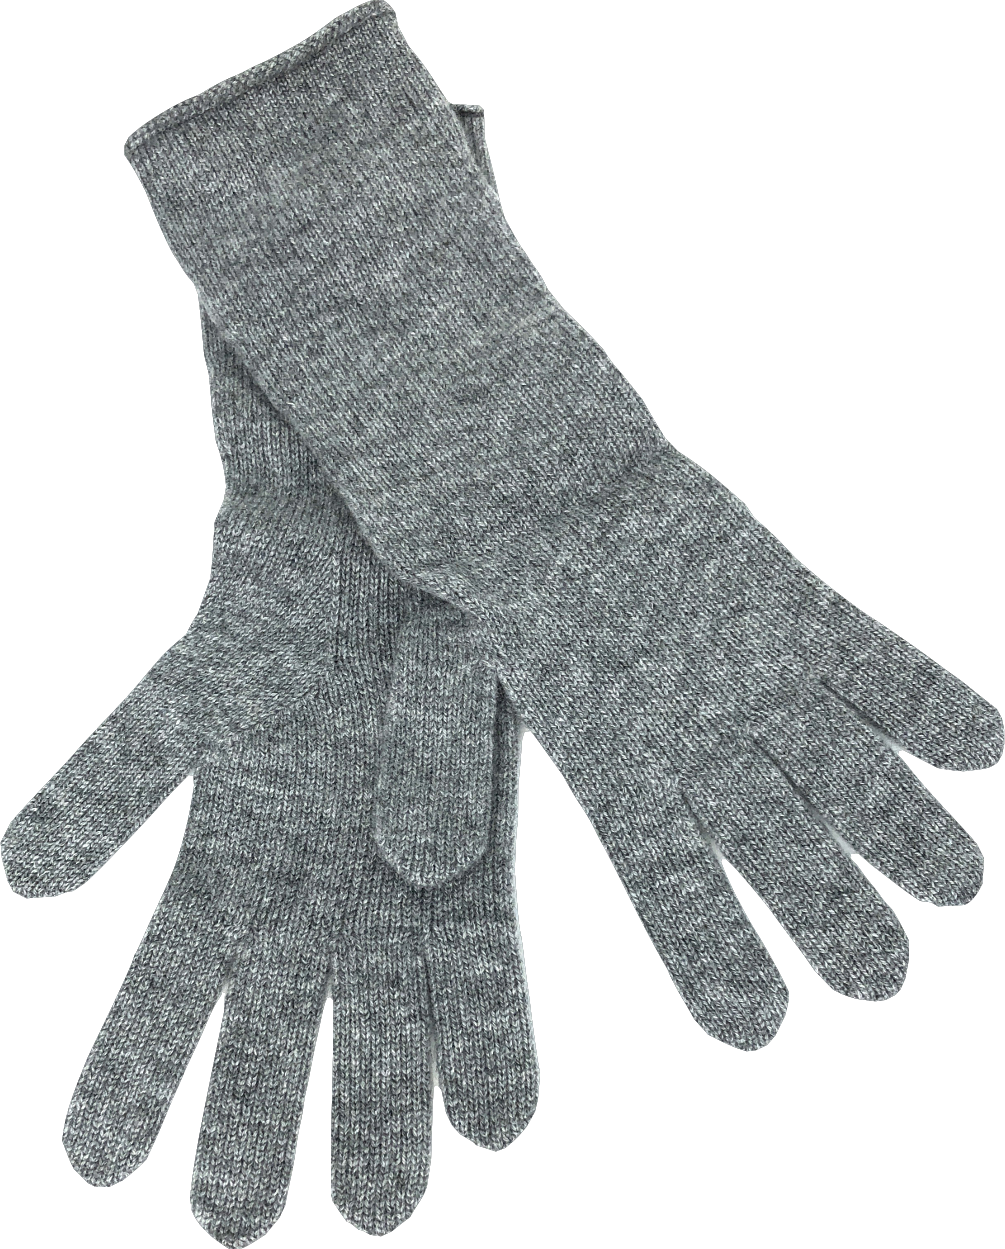 Arch4 Grey Snowberry Cashmere Gloves One Size